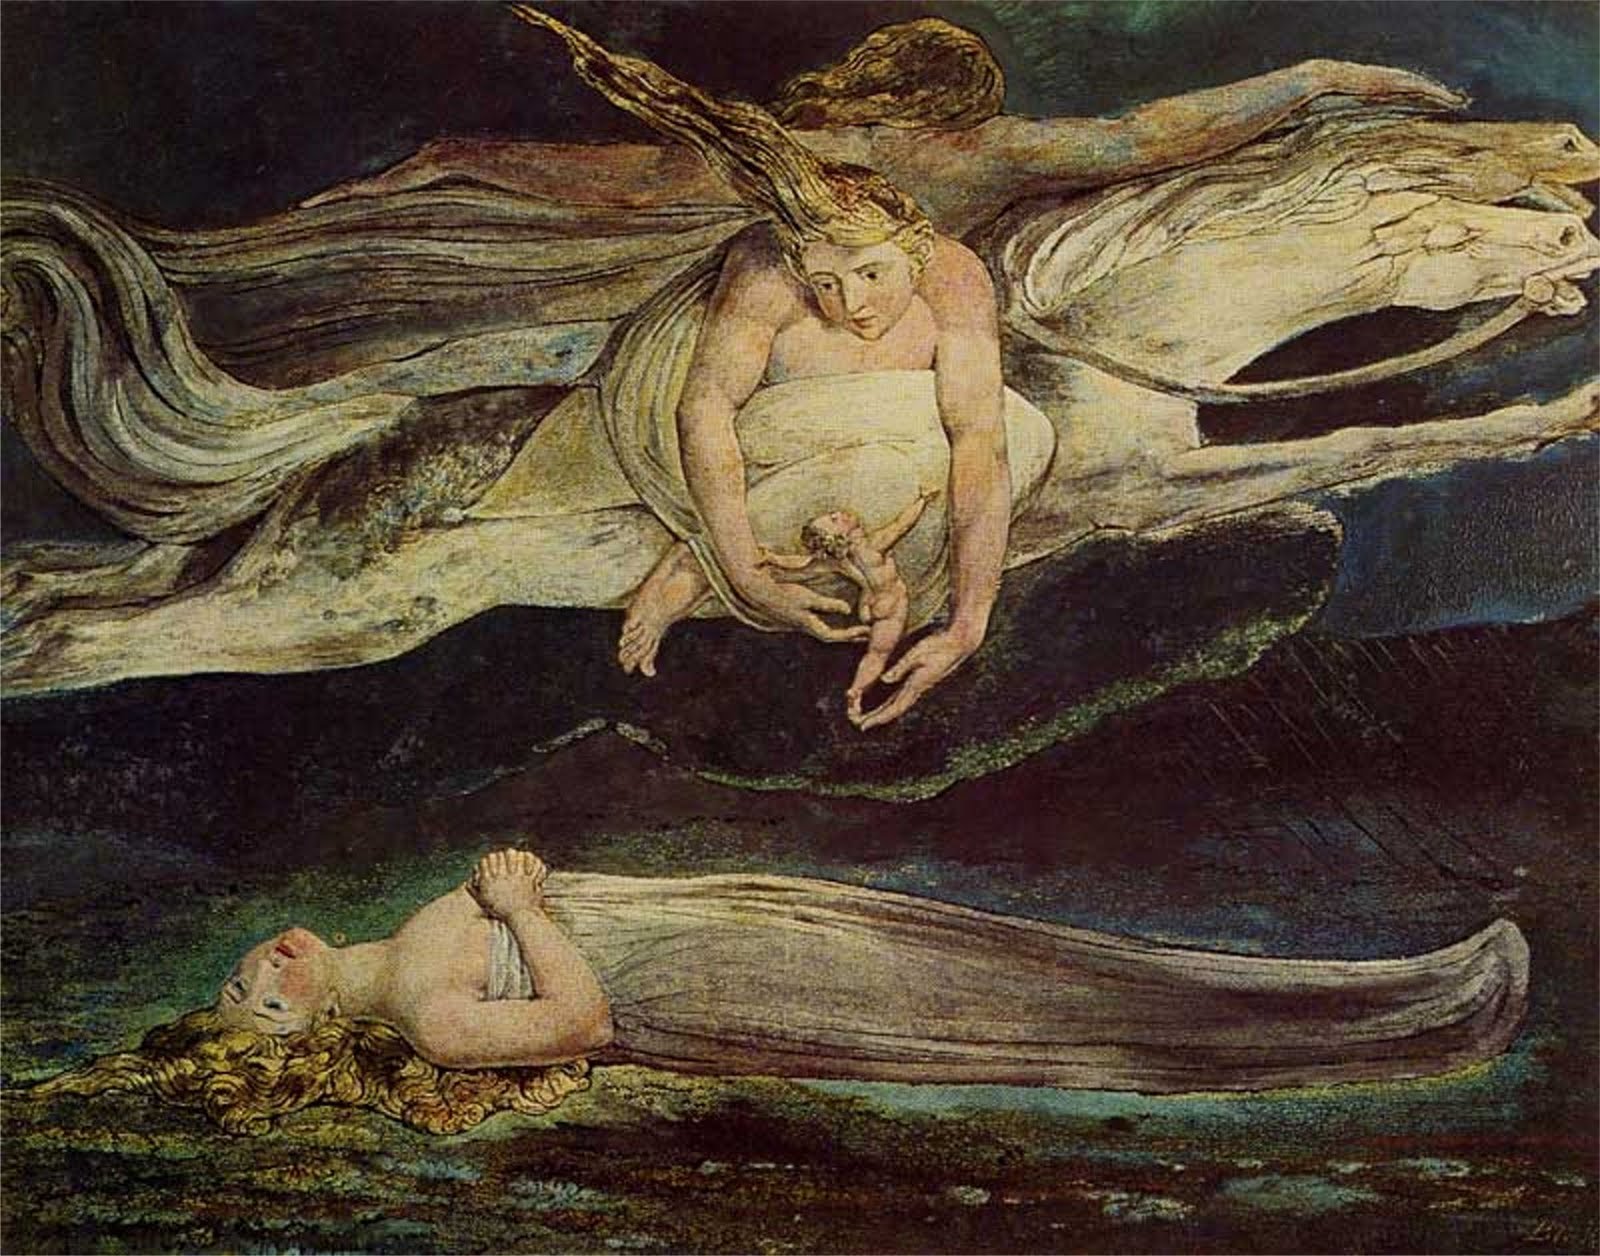 Piéta by William Blake - 1795 - - Tate Modern